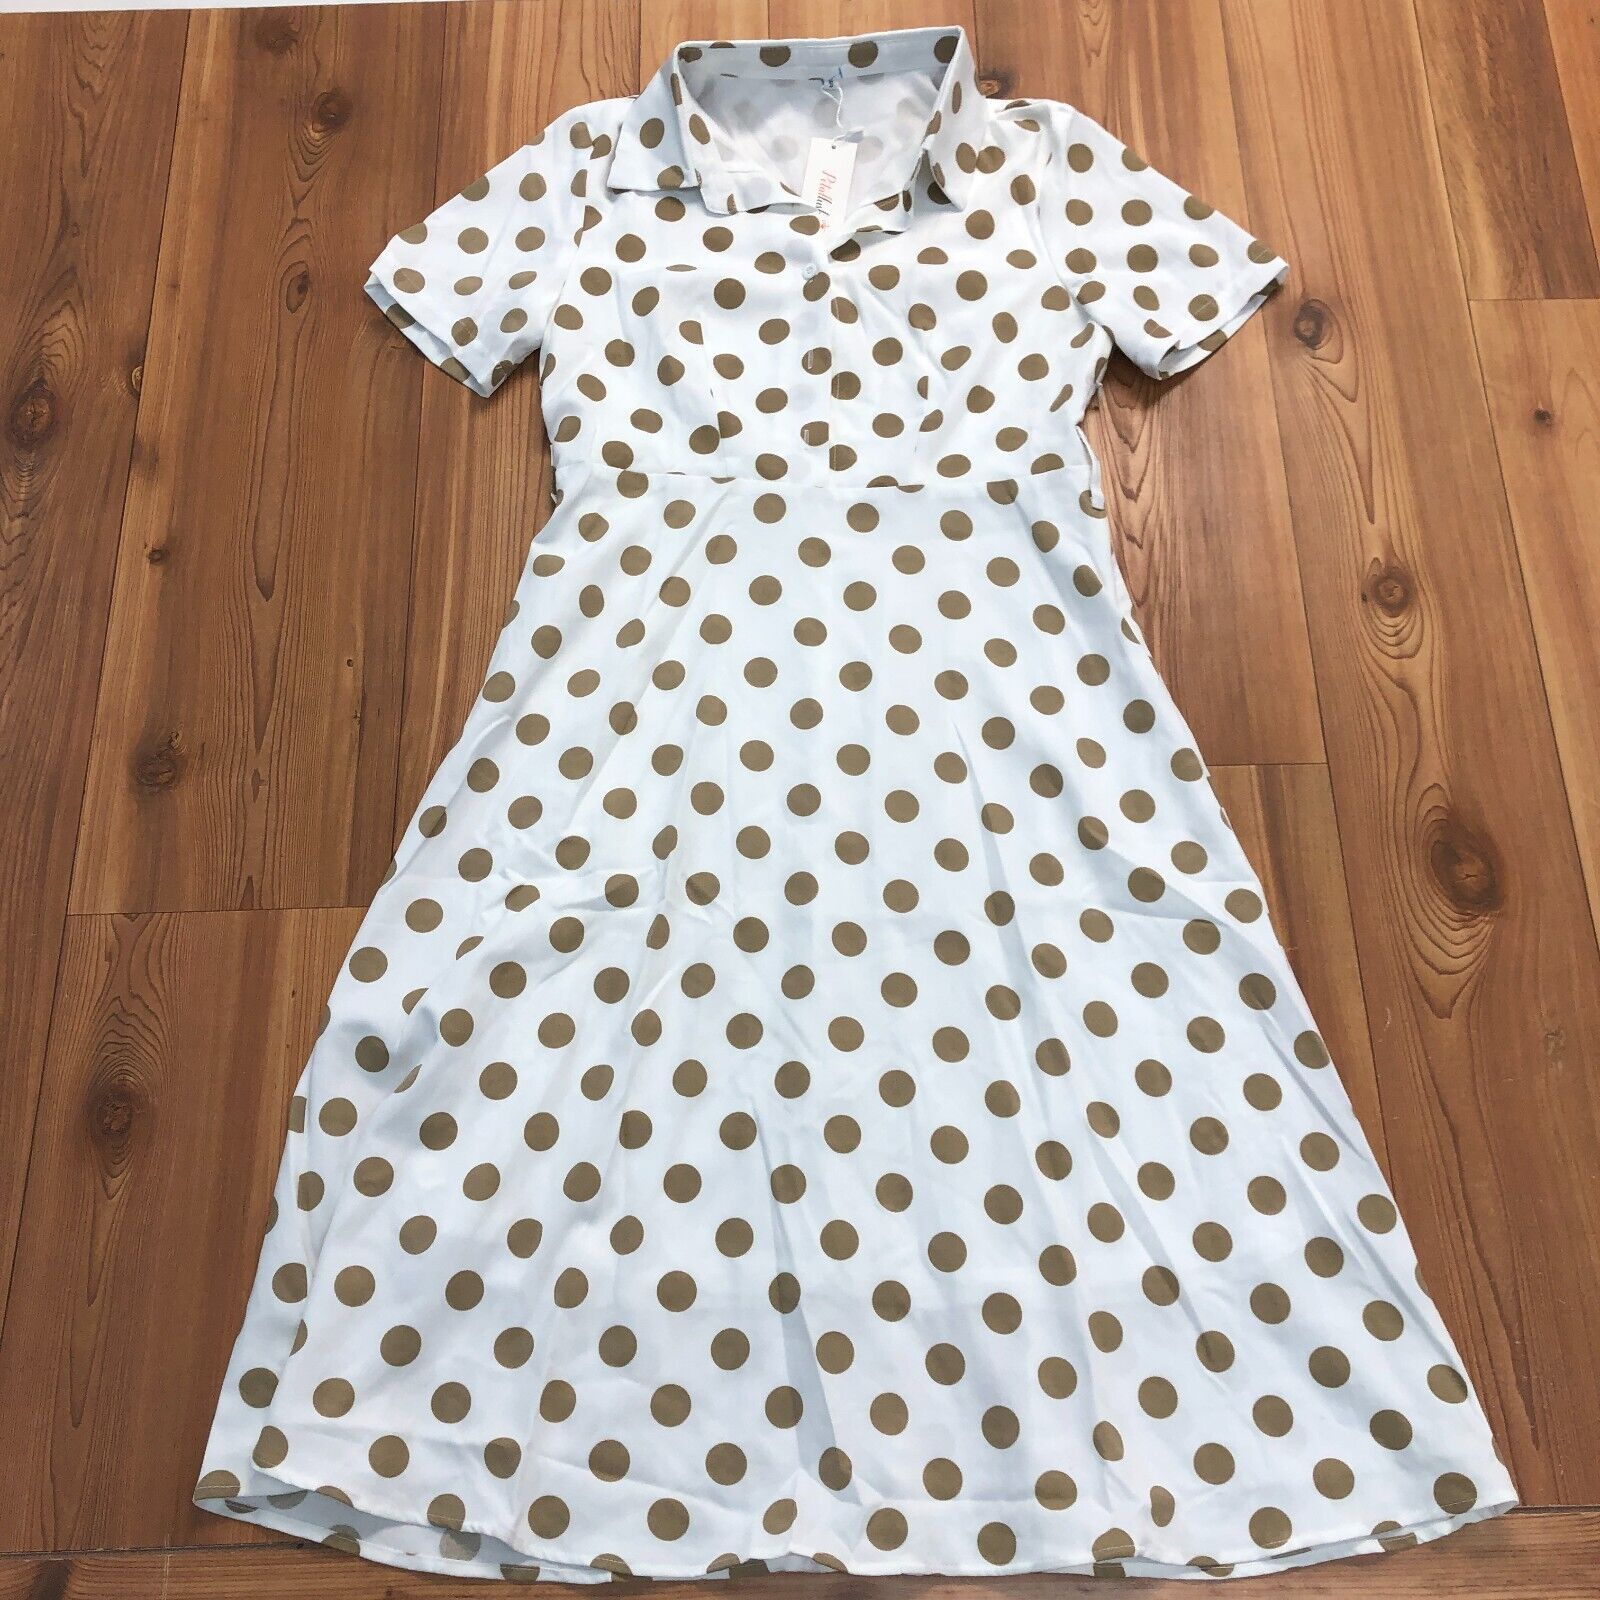 New Petallush White Polka Dot Short Sleeve X-Line Dress Women's Size S